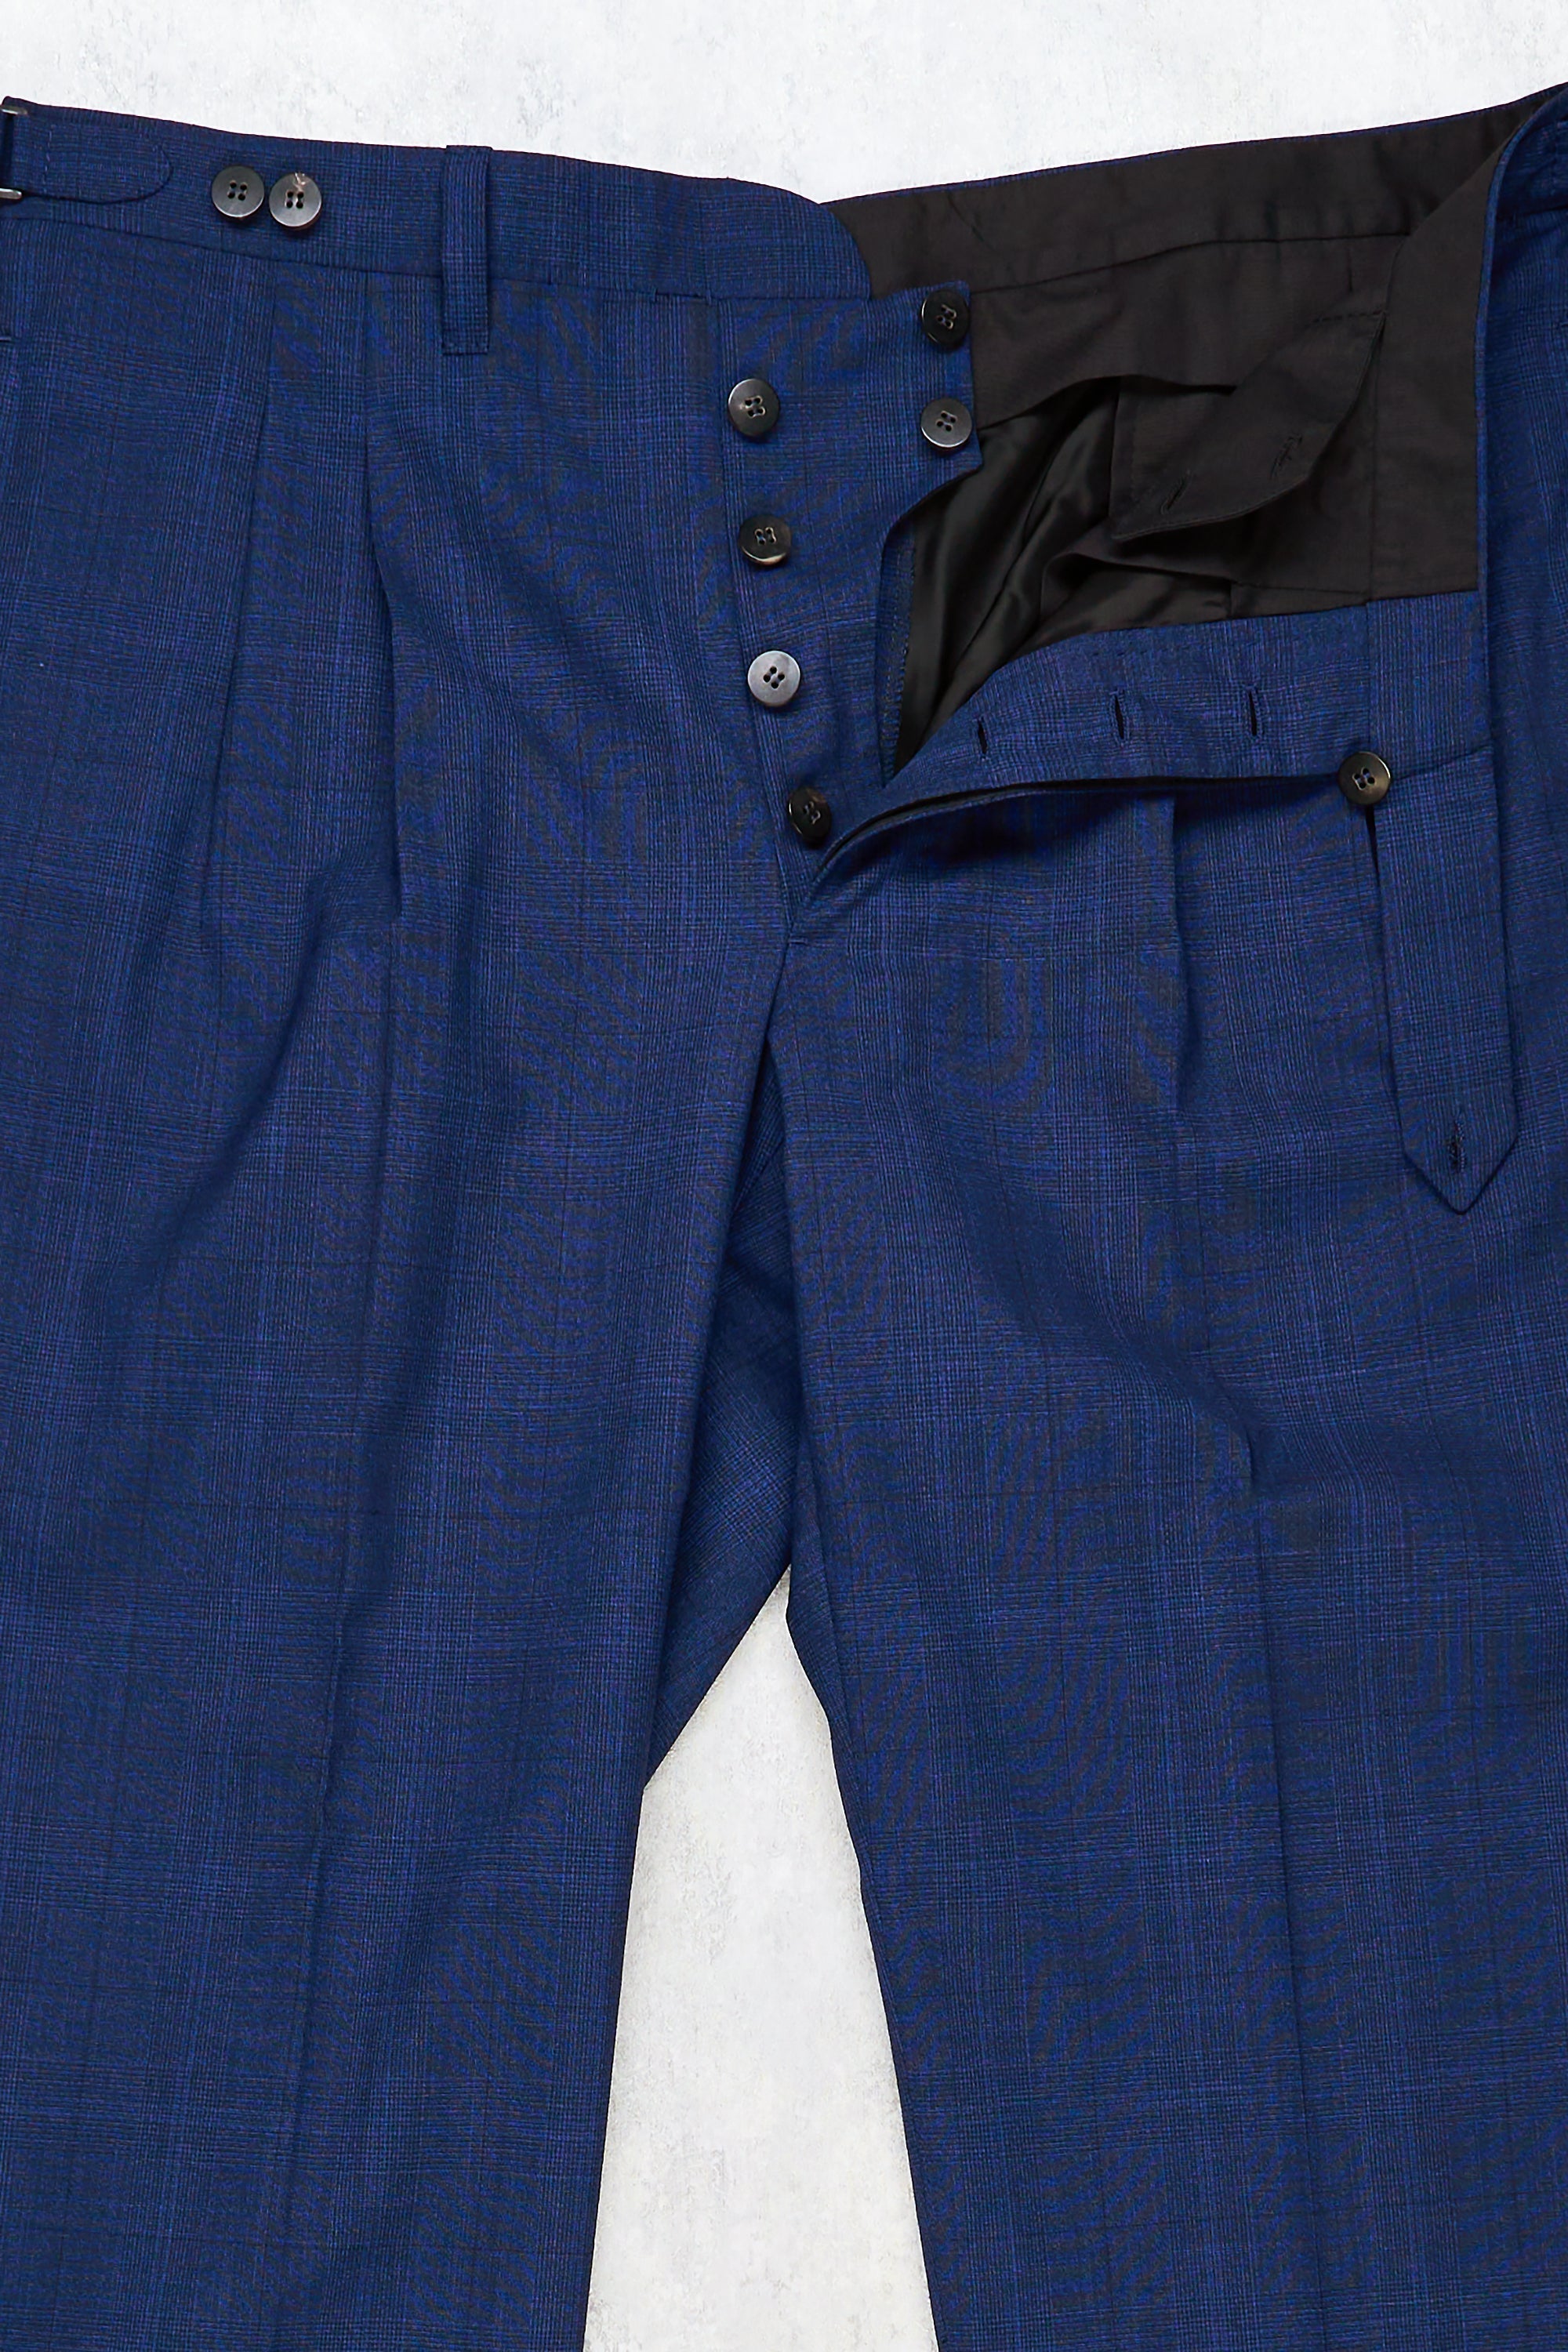 Cesare Attolini Blue/Black Check Wool Suit